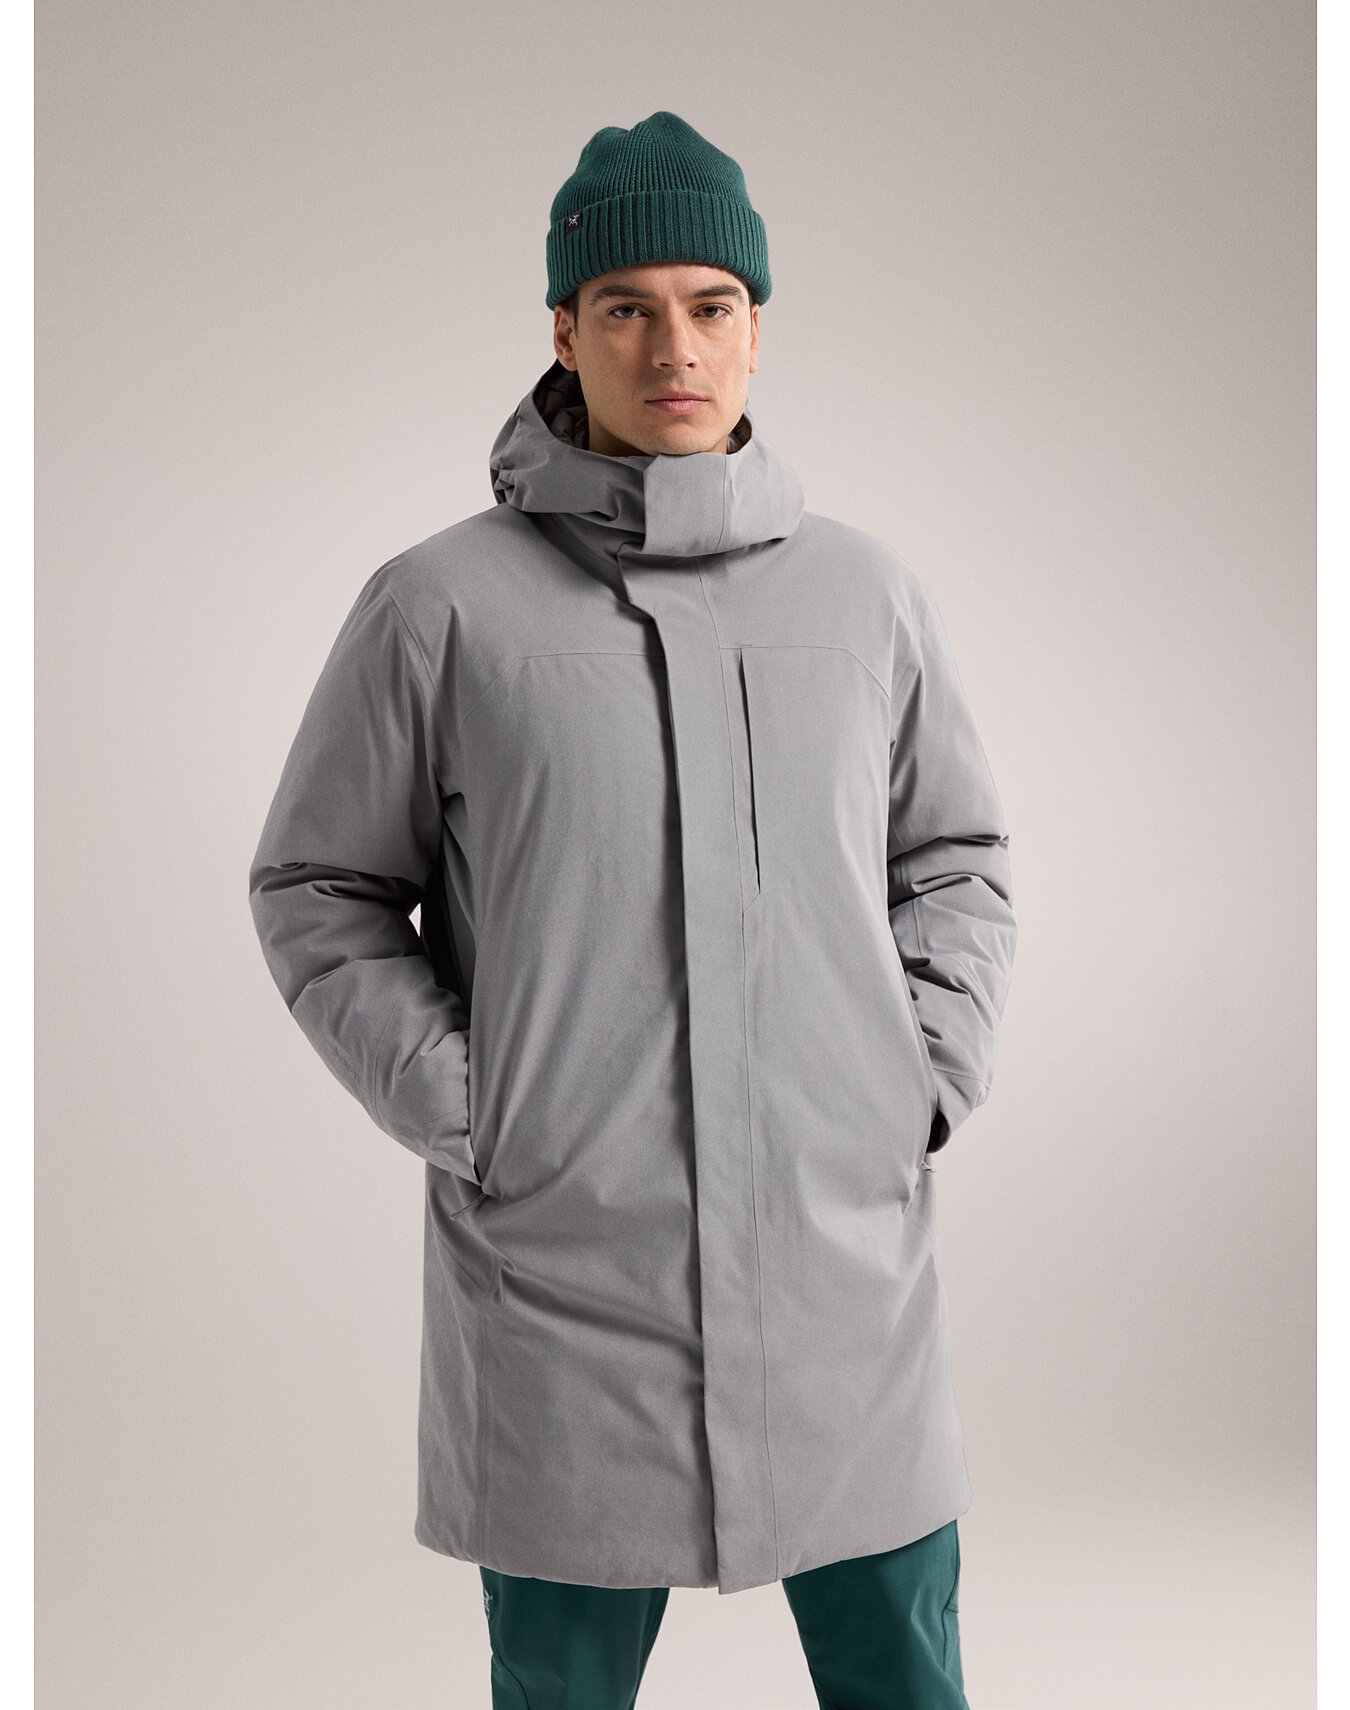 Men's Gore-tex (Waterproof) Insulated Jackets | Arc'teryx